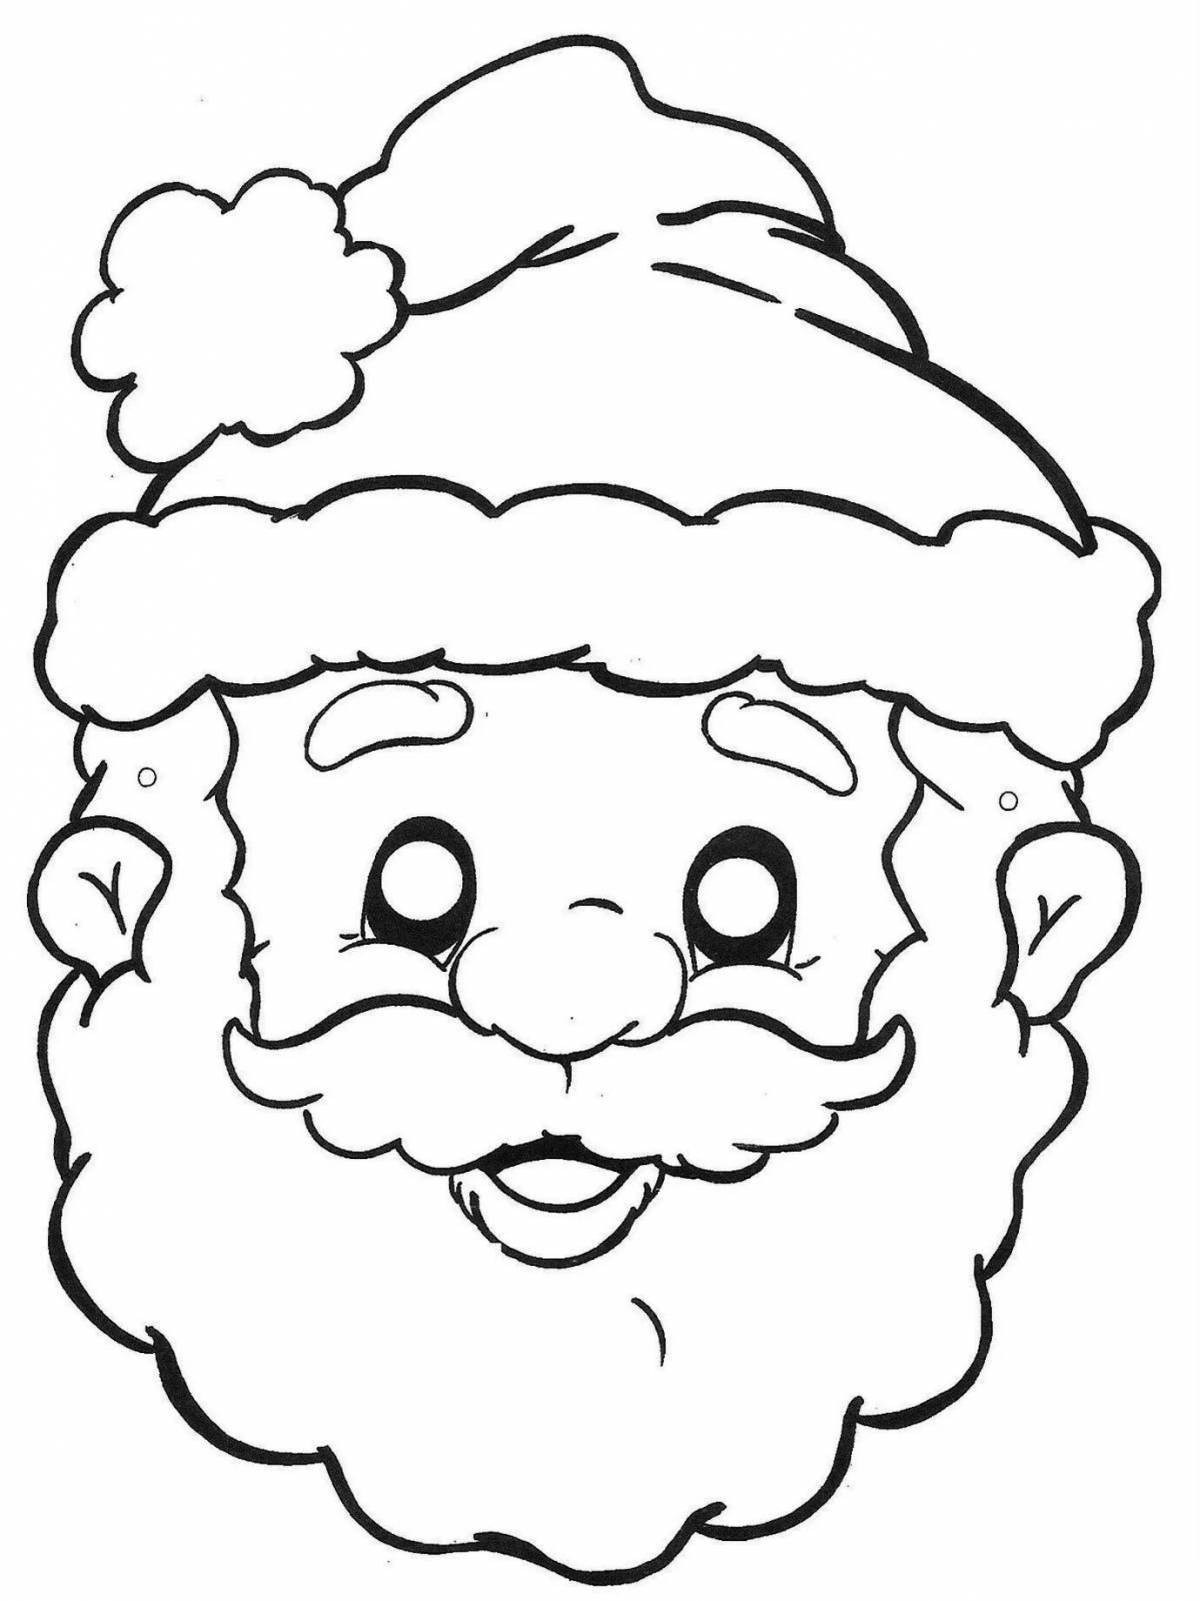 Santa's glowing head coloring page